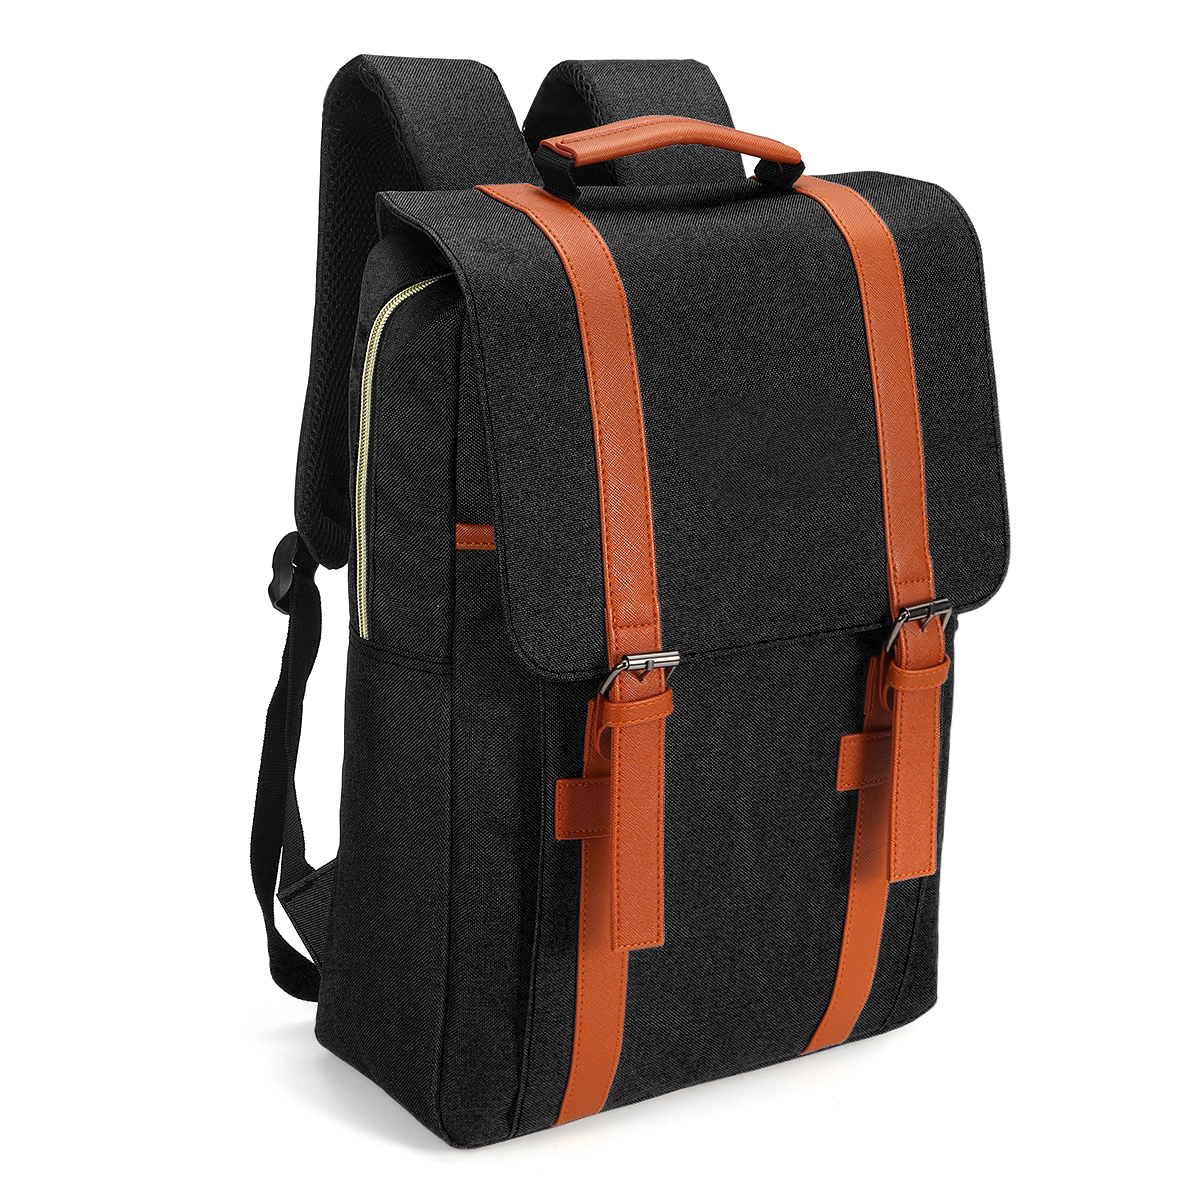 Outdoor-Travel-Backpack-Waterproof-Nylon-School-Bag-Large-Laptop-Bag-Unisex-Business-Bag-1615929-2